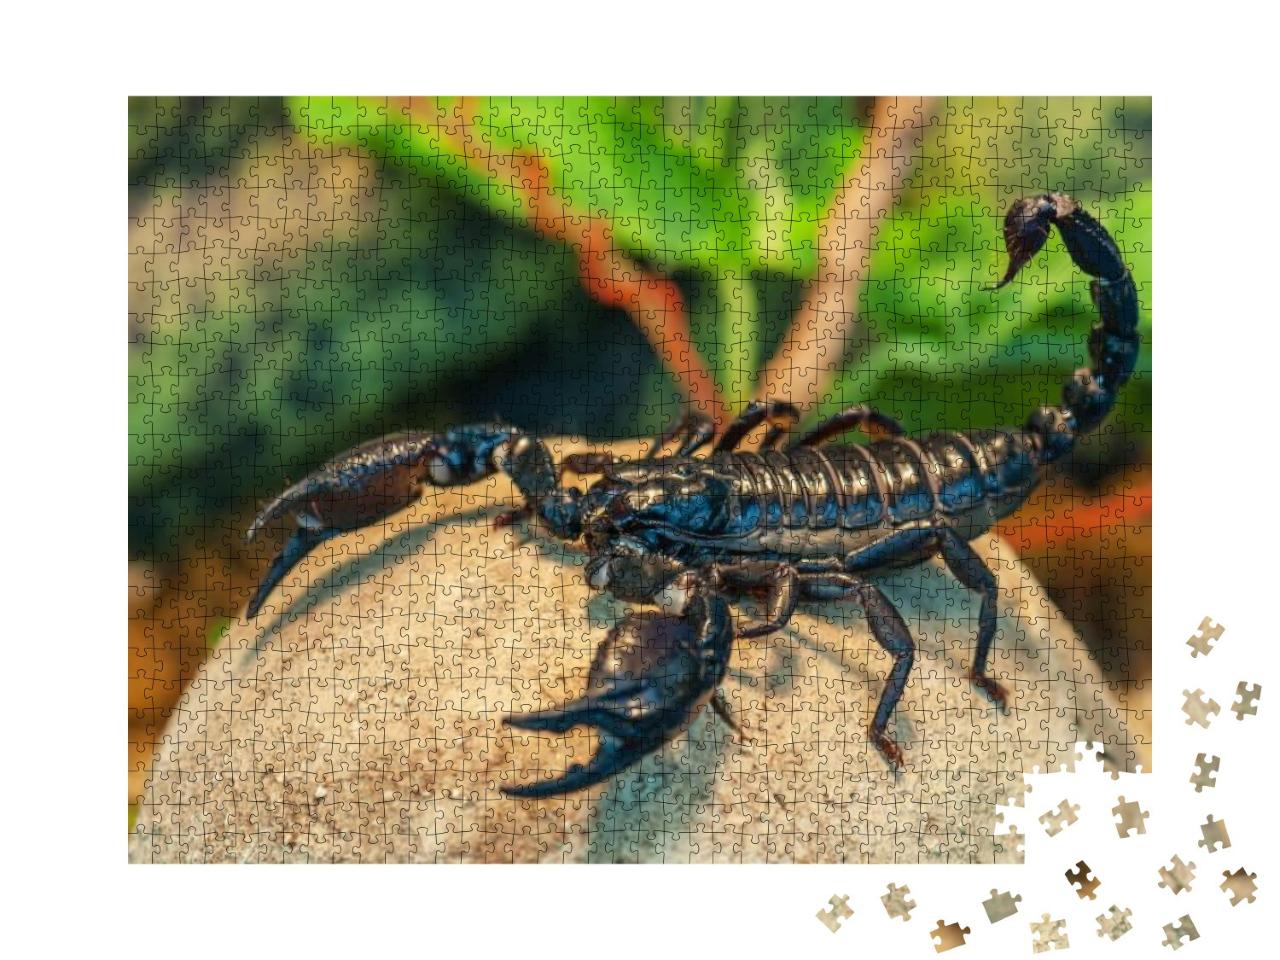 Live Black Scorpion Emperor Scorpion... Jigsaw Puzzle with 1000 pieces